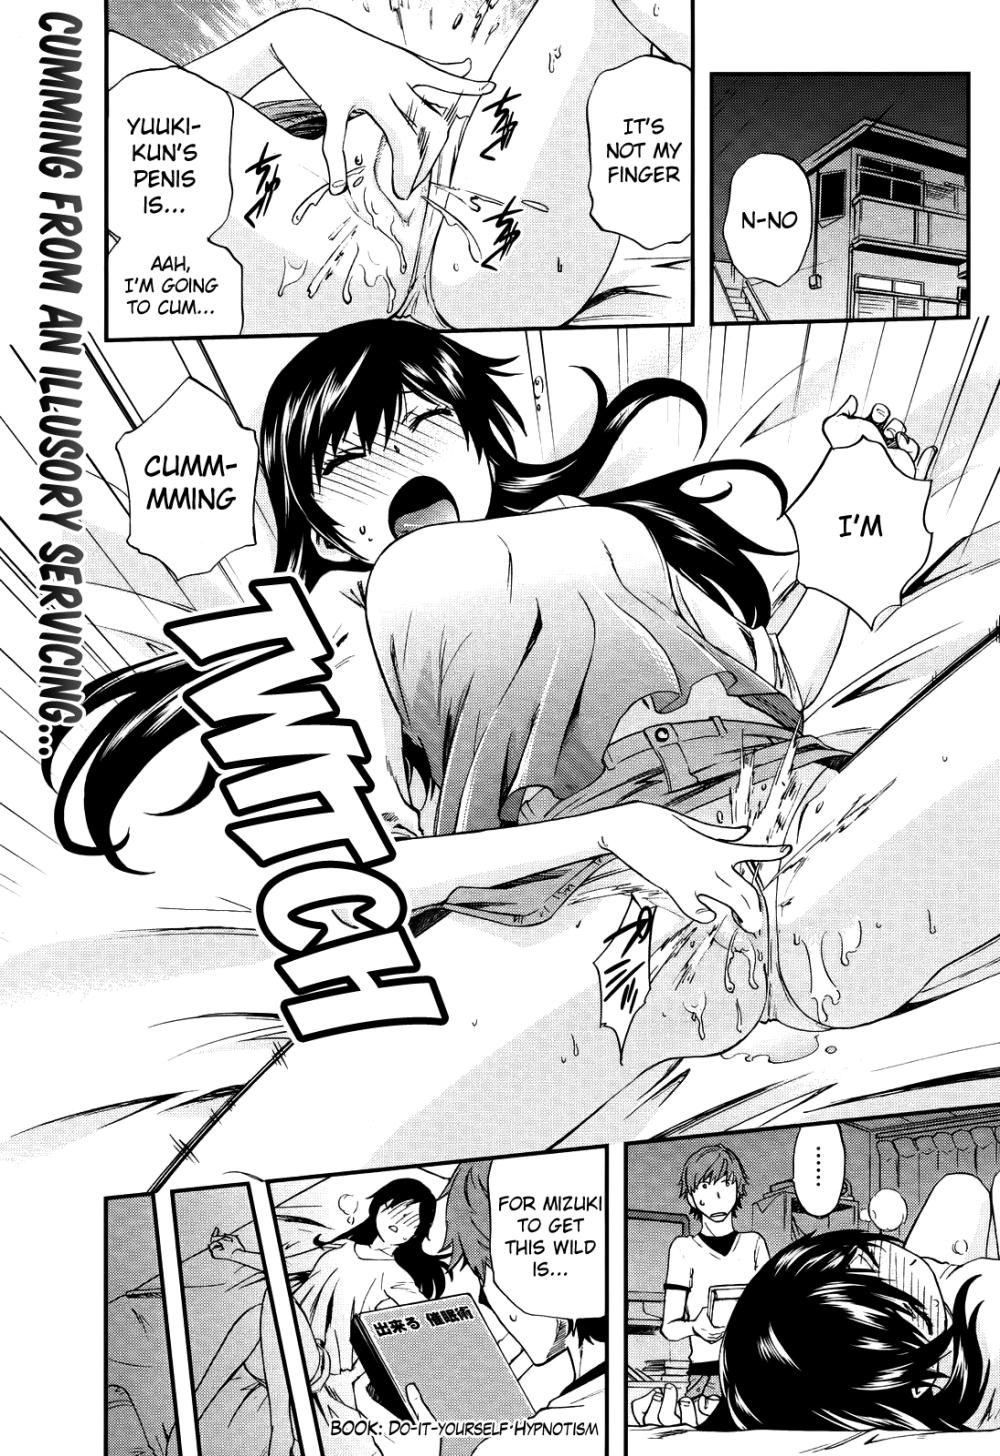 Anime porn reading